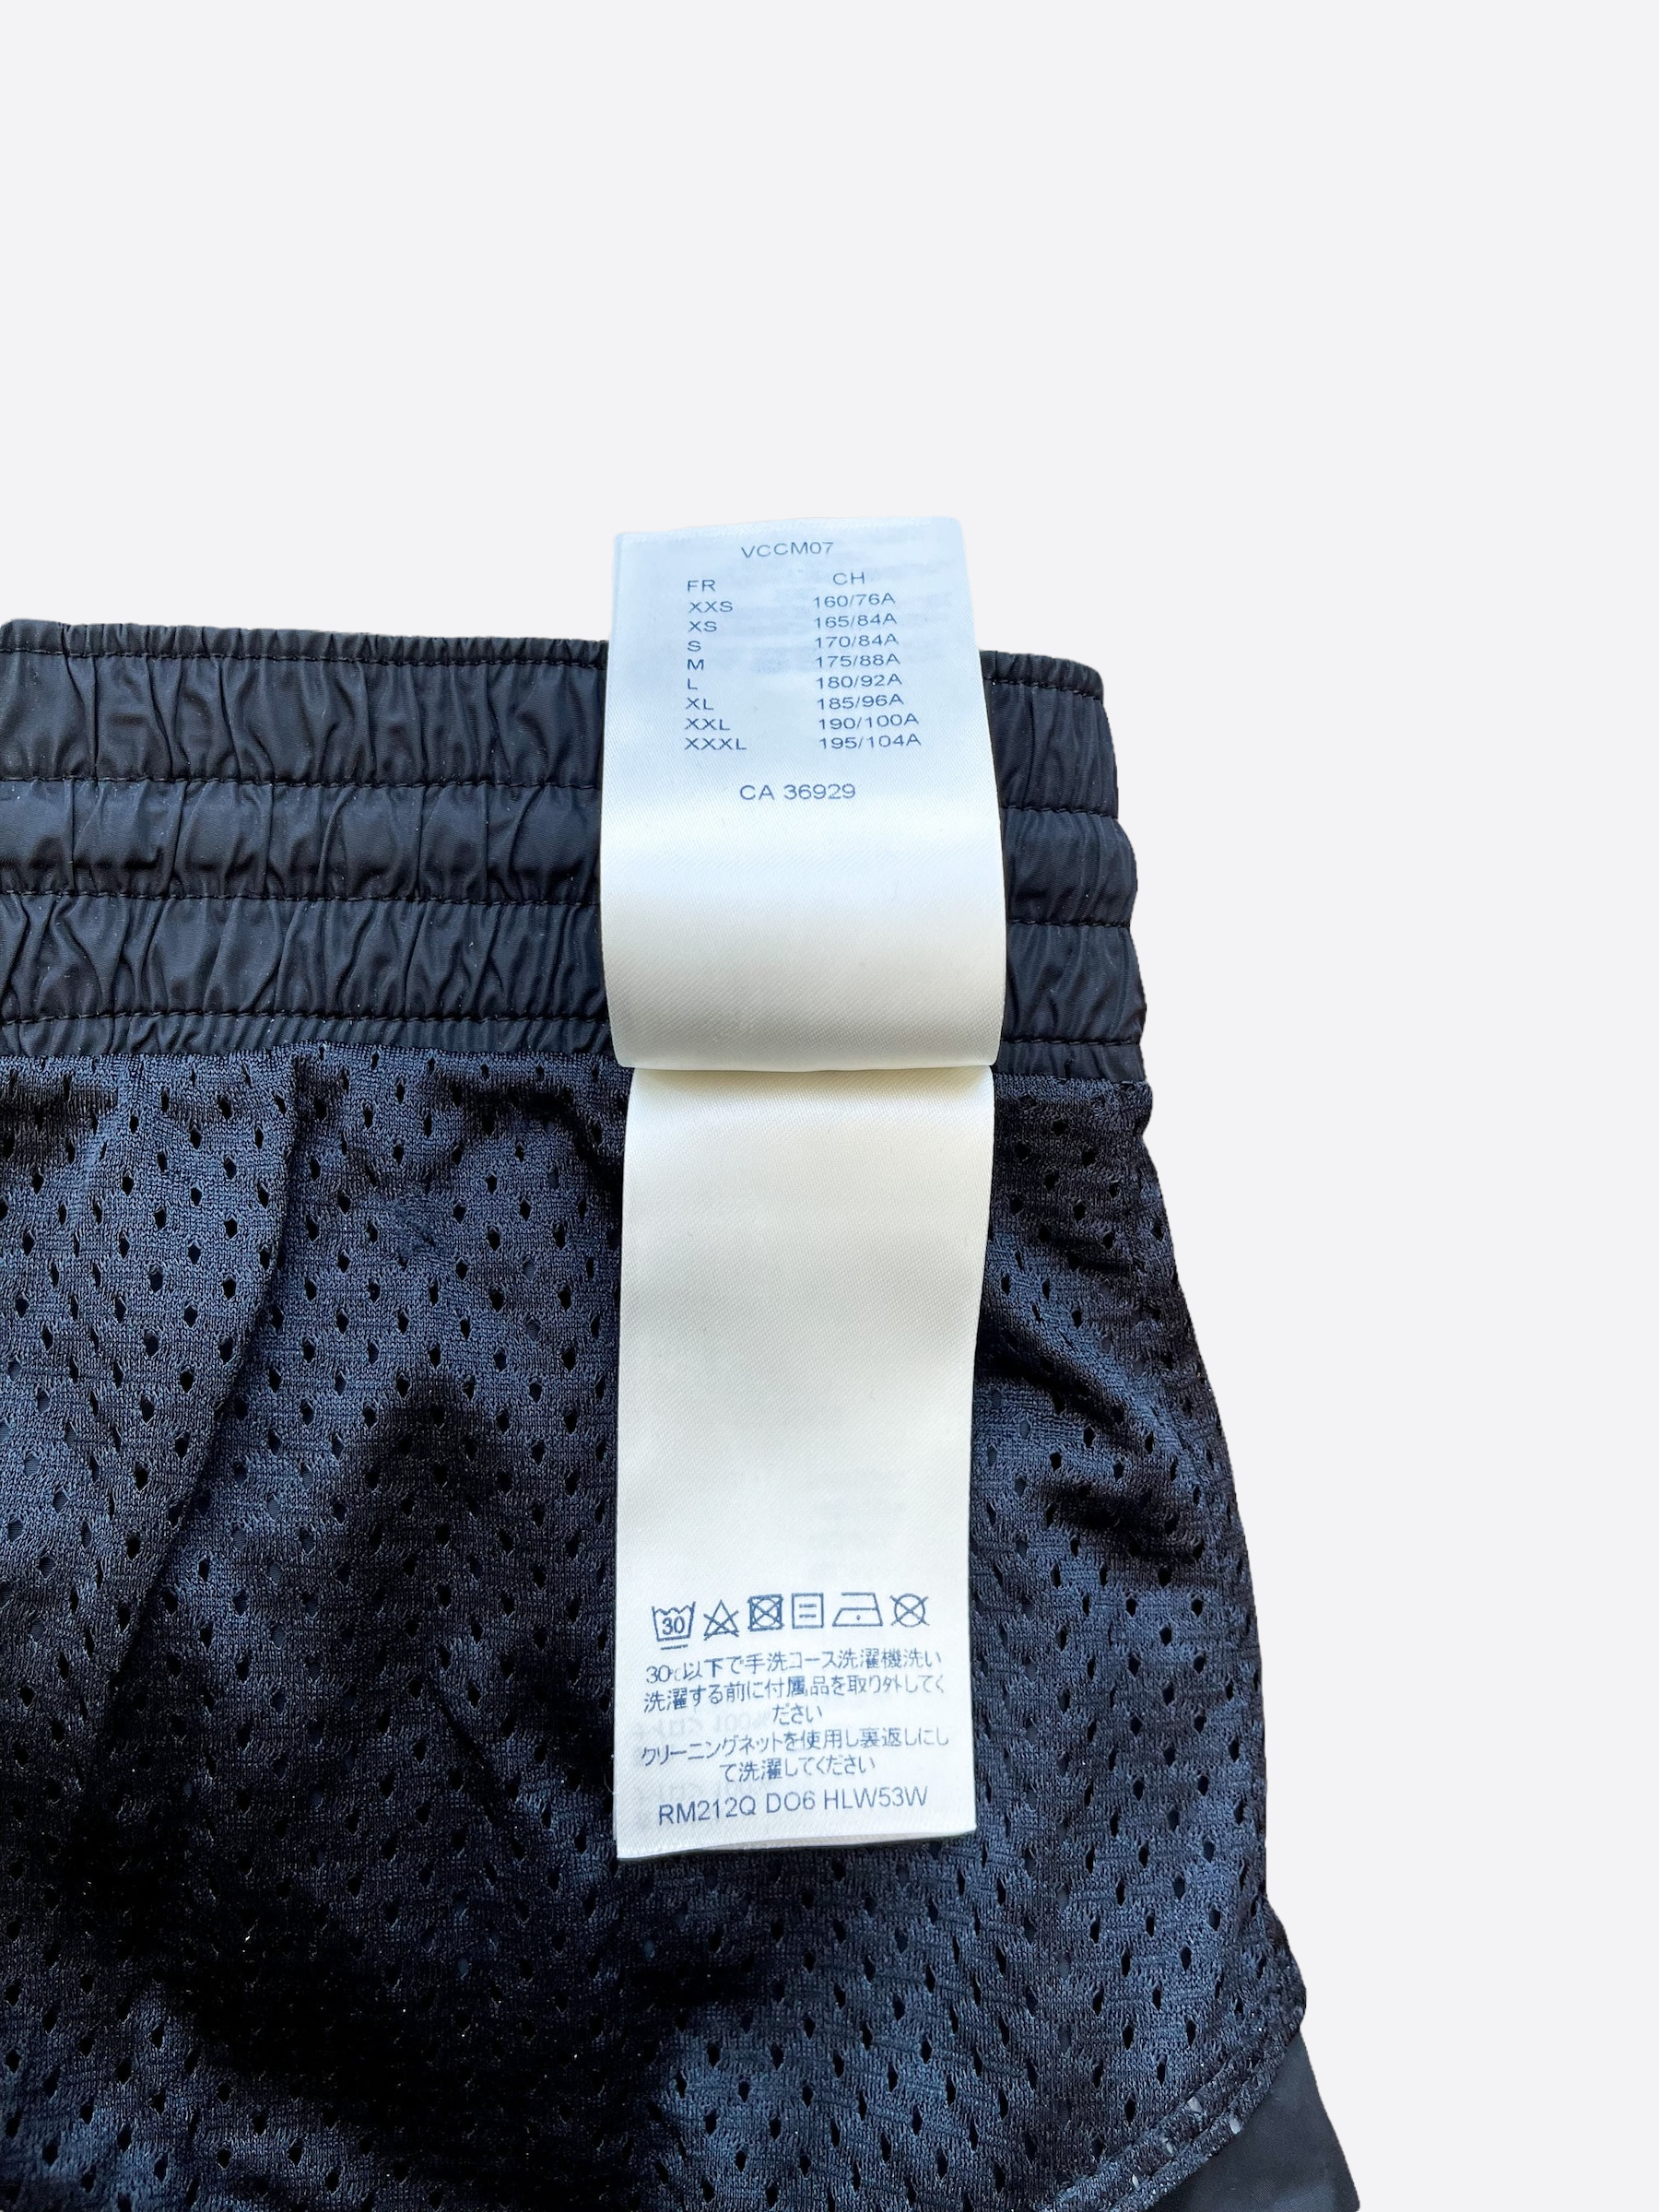 Louis Vuitton Monogram Aquagarden Nylon Dark Denim Blue Swim Shorts – Cheap  Ellisonbronze Jordan outlet